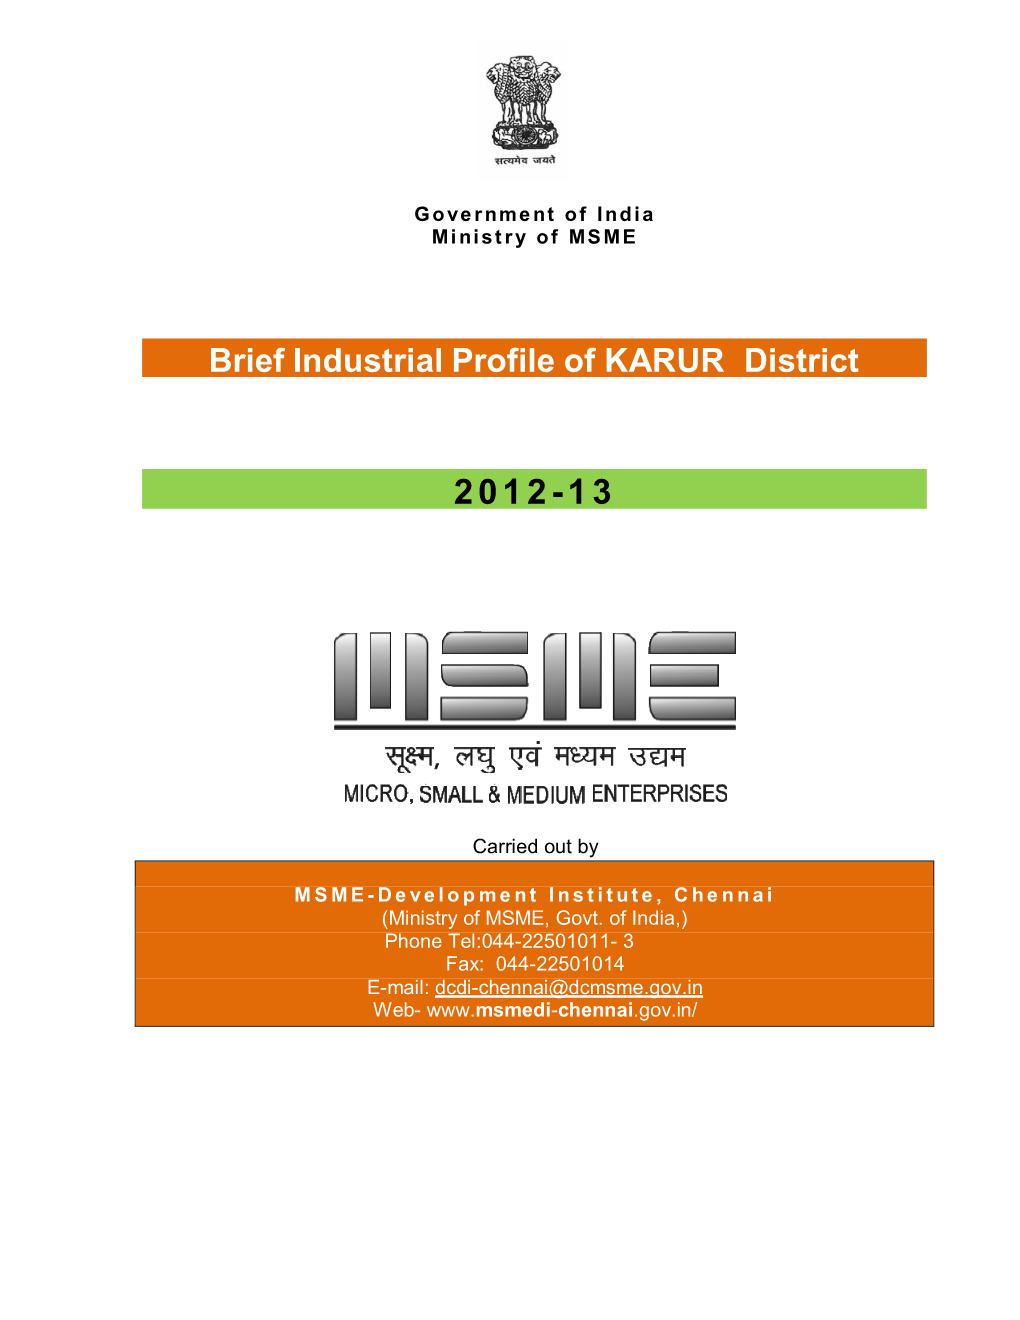 Brief Industrial Profile of KARUR District